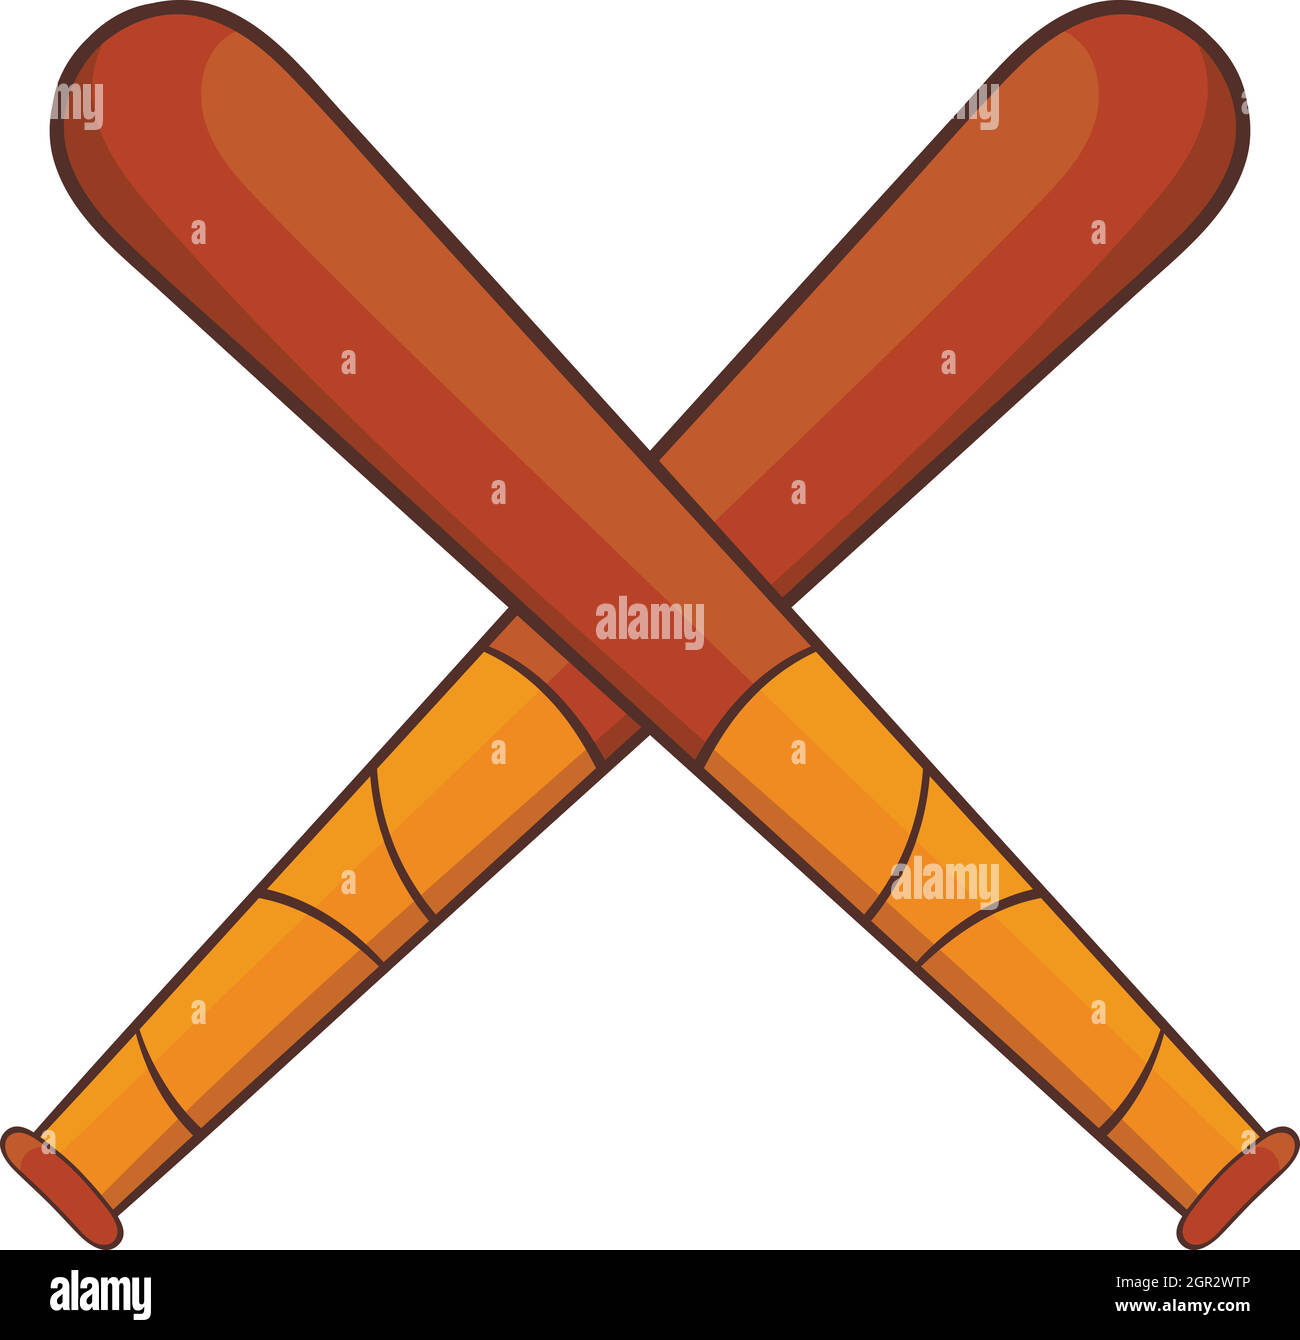 Crossed baseball bats icon, cartoon style Stock Vector